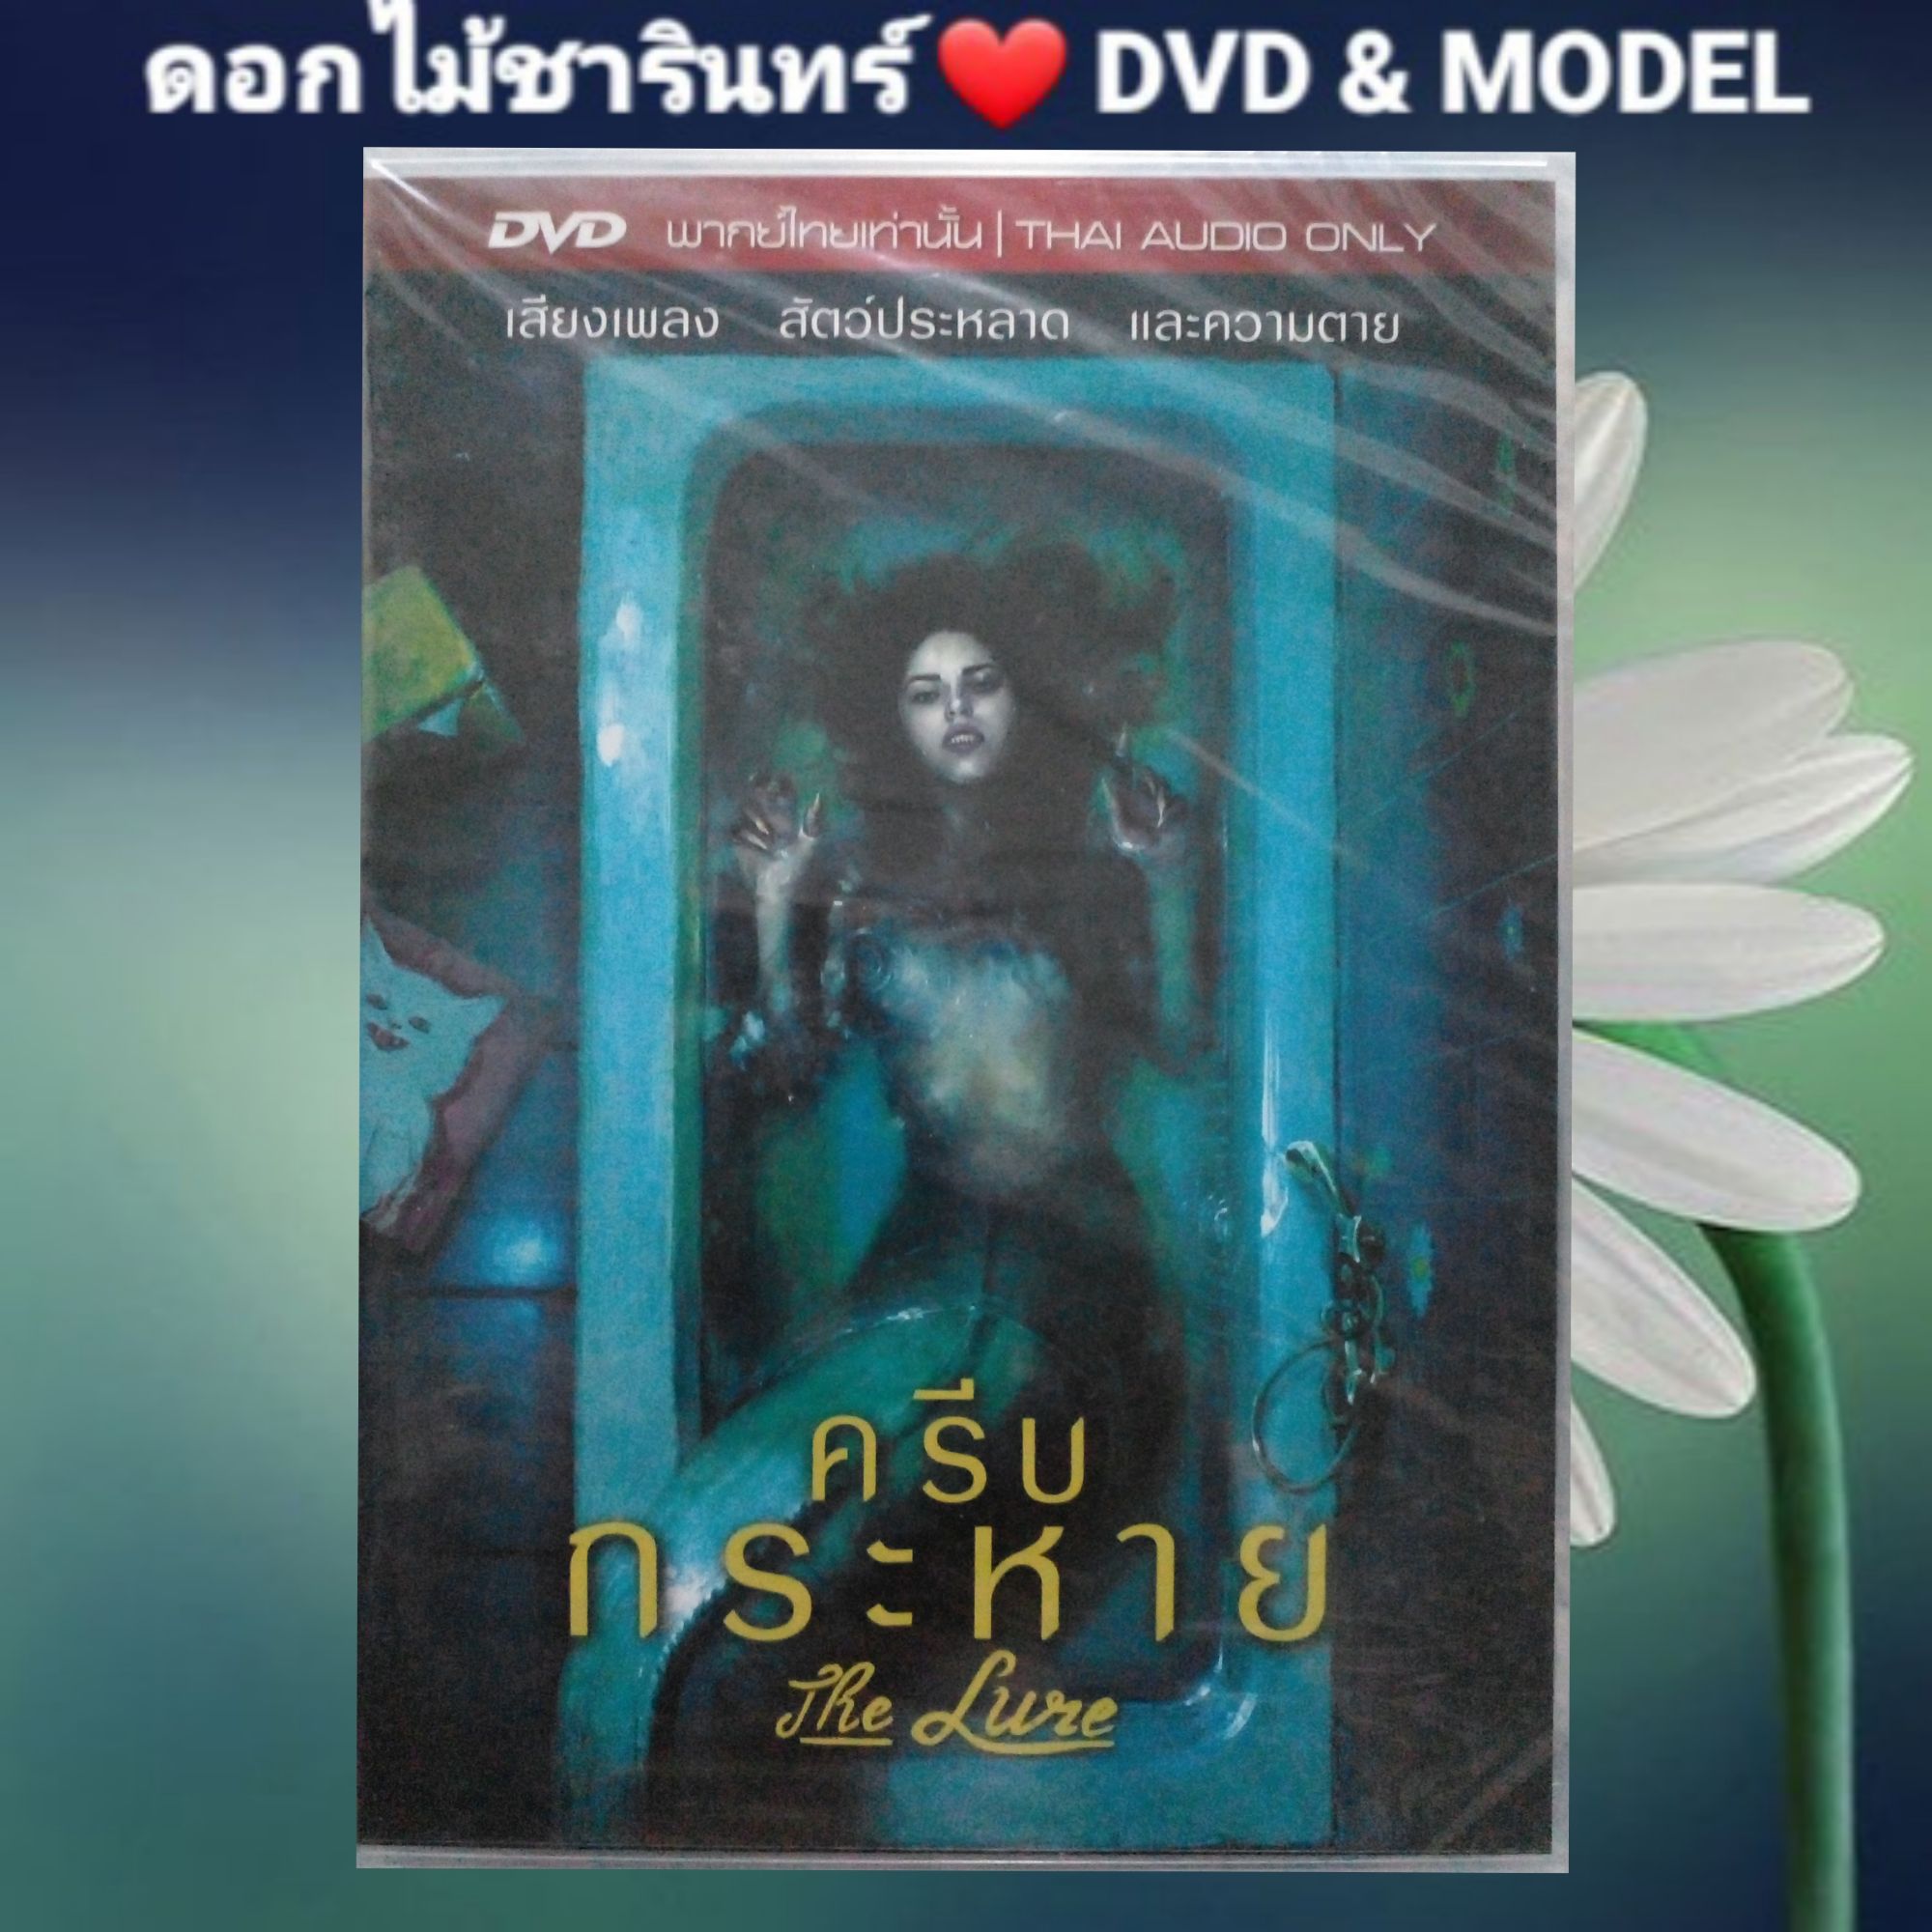 DVD Master : THE LURE ครีบกระหาย พากษ์ไทย หนังสยองขวัญ ระทึกขวัญ  เอาชีวิตรอด